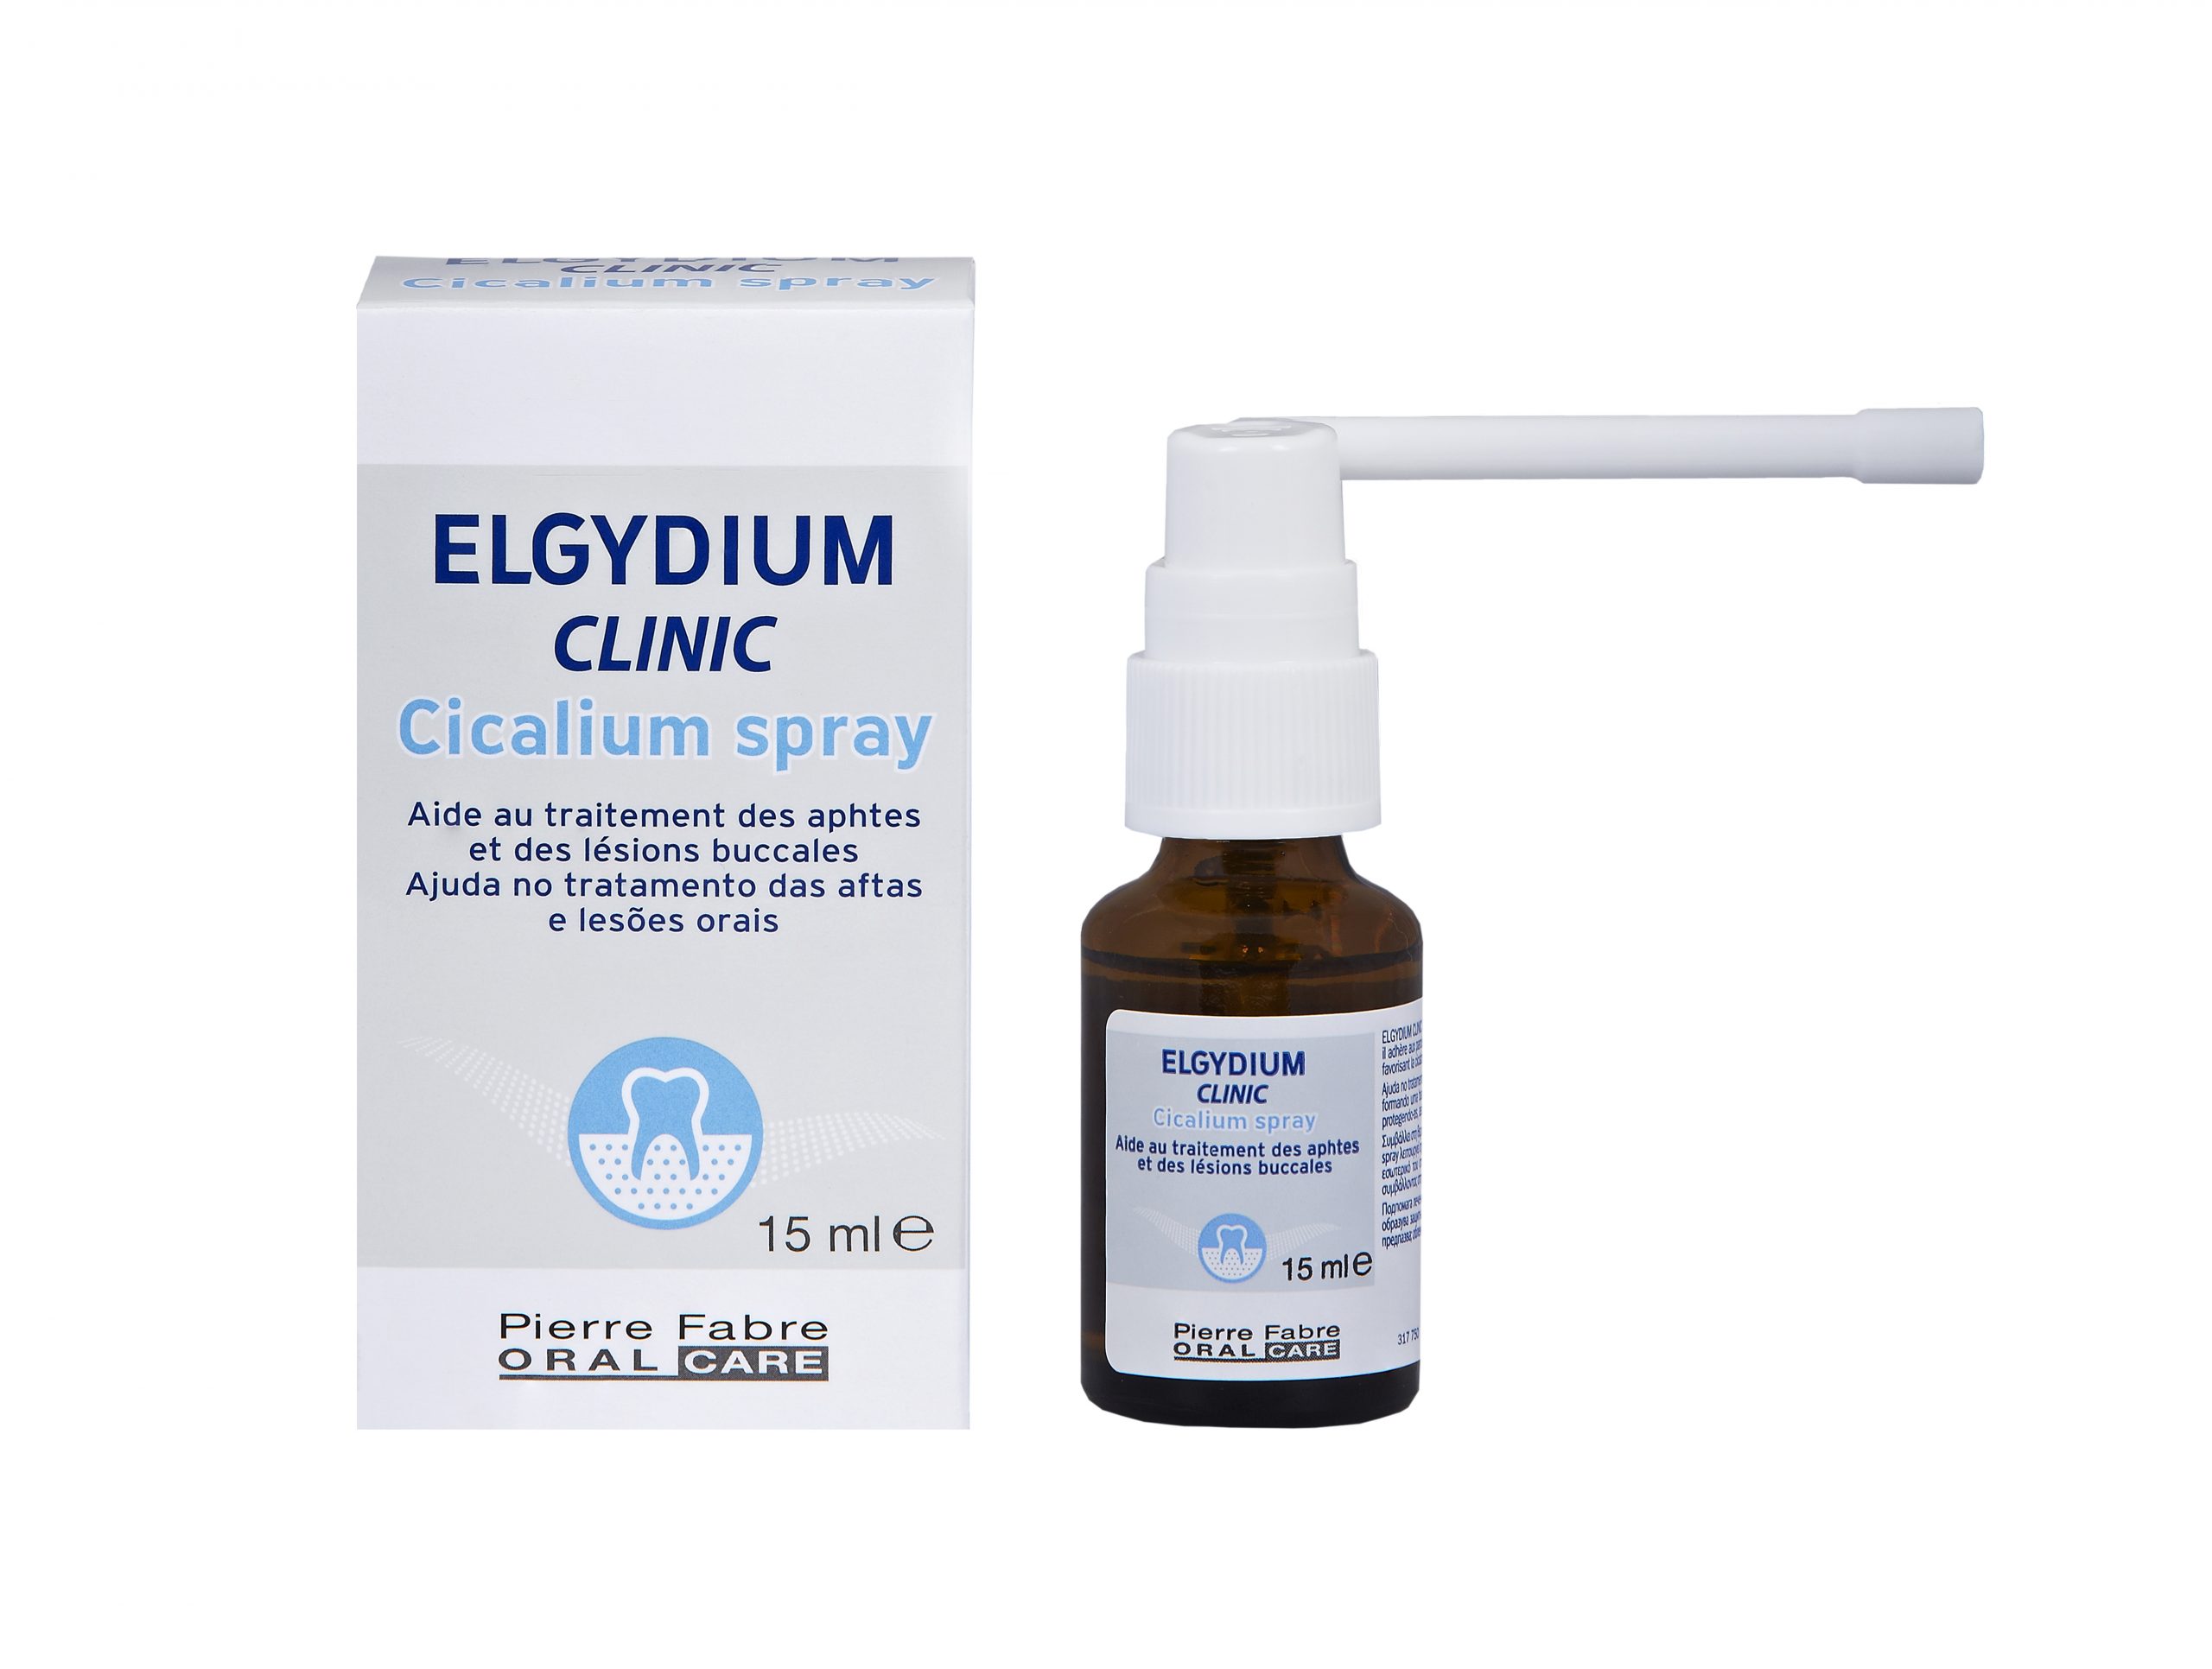 Elgydium_Clinic_Cicalium_Spray_15ml_Farmacia_Arade-scaled-1.jpg